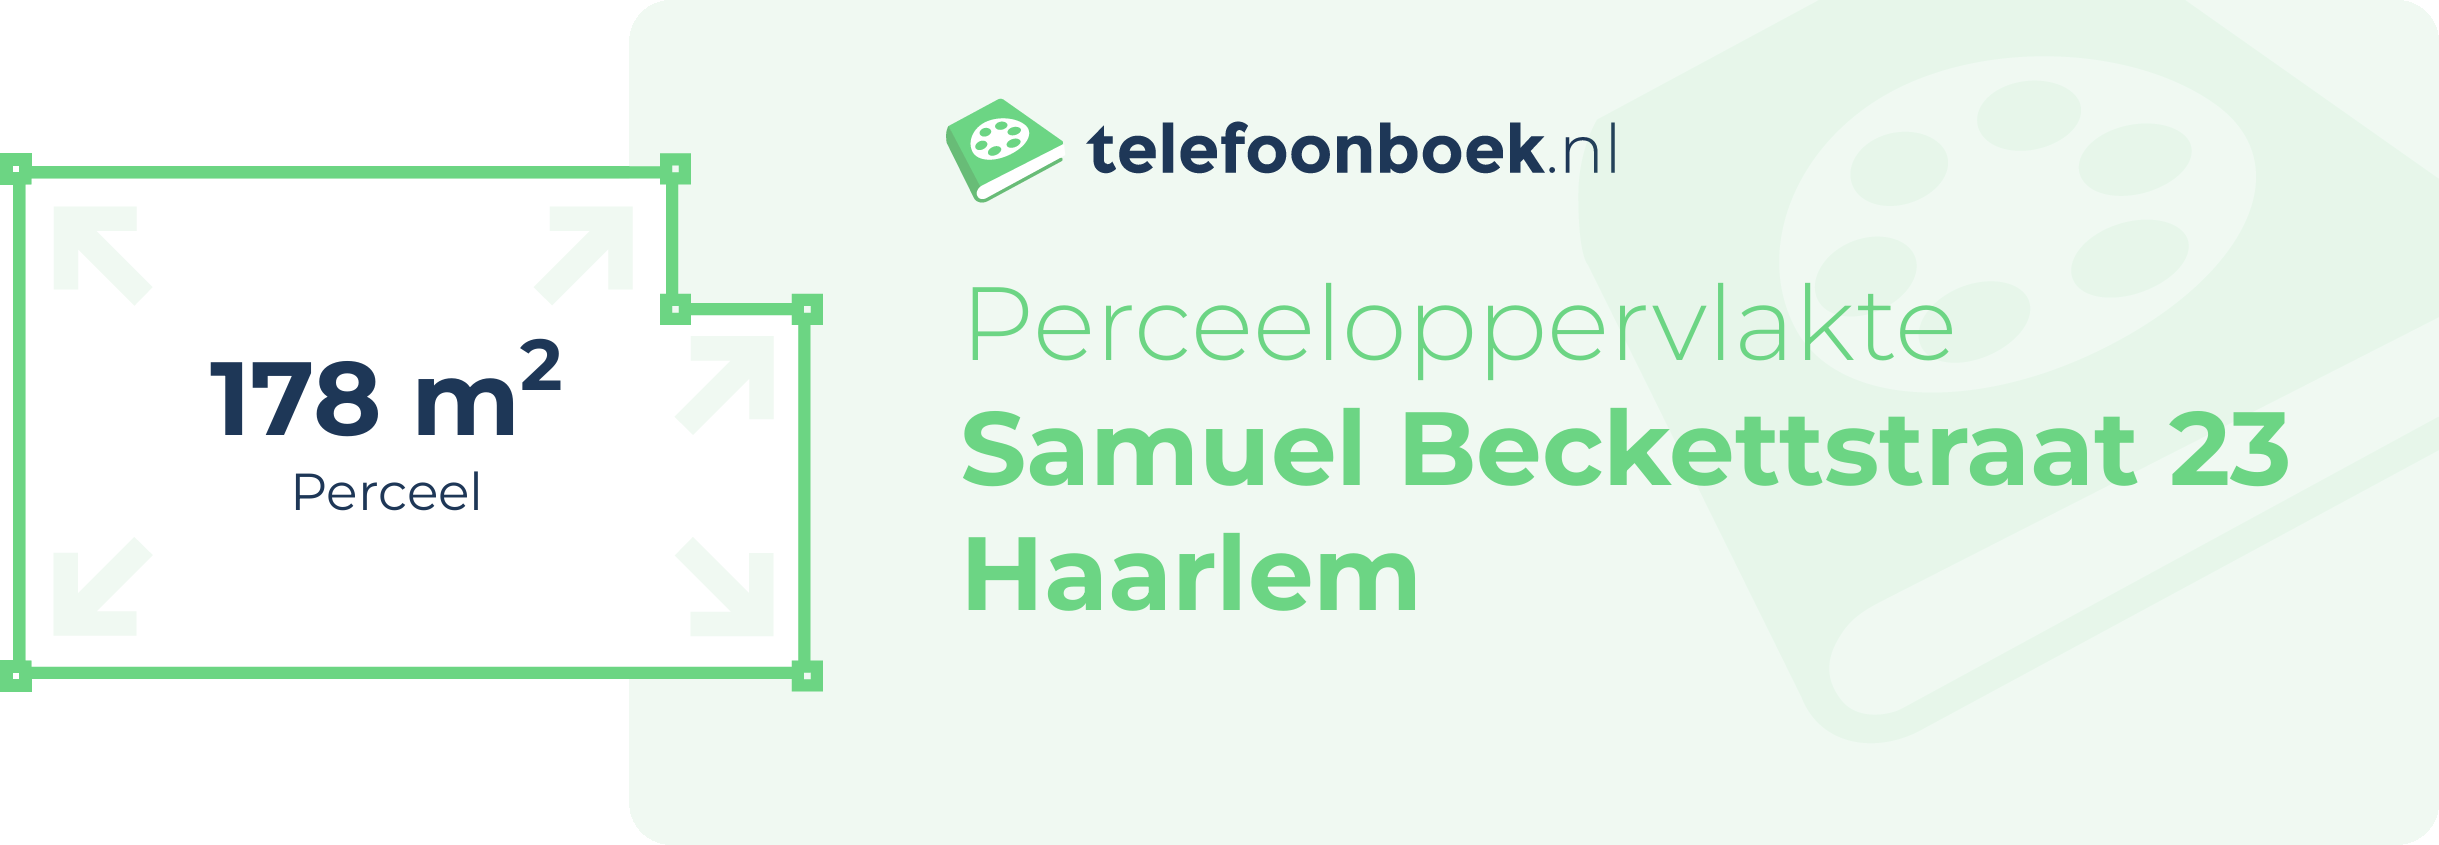 Perceeloppervlakte Samuel Beckettstraat 23 Haarlem